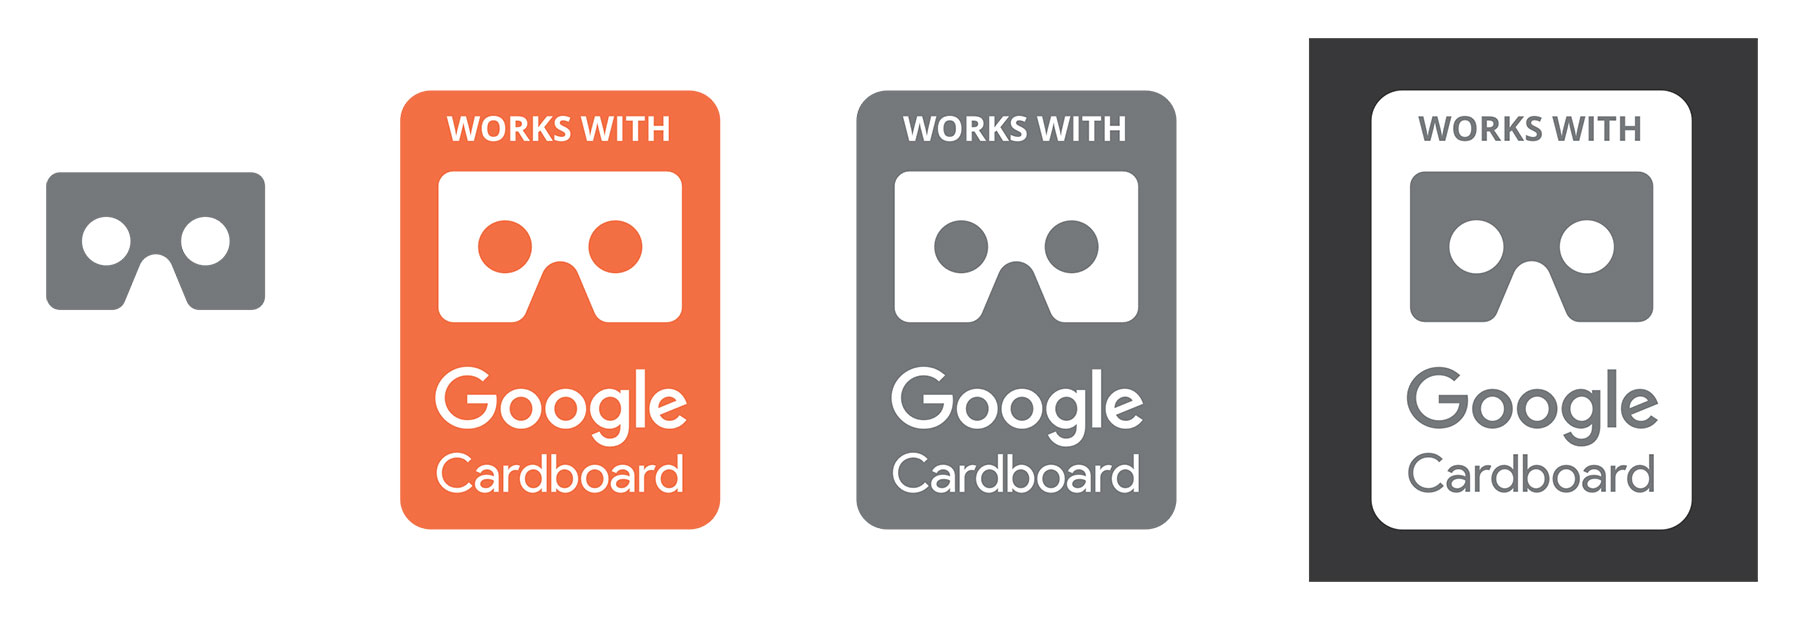 Google Cardboard VR 徽章